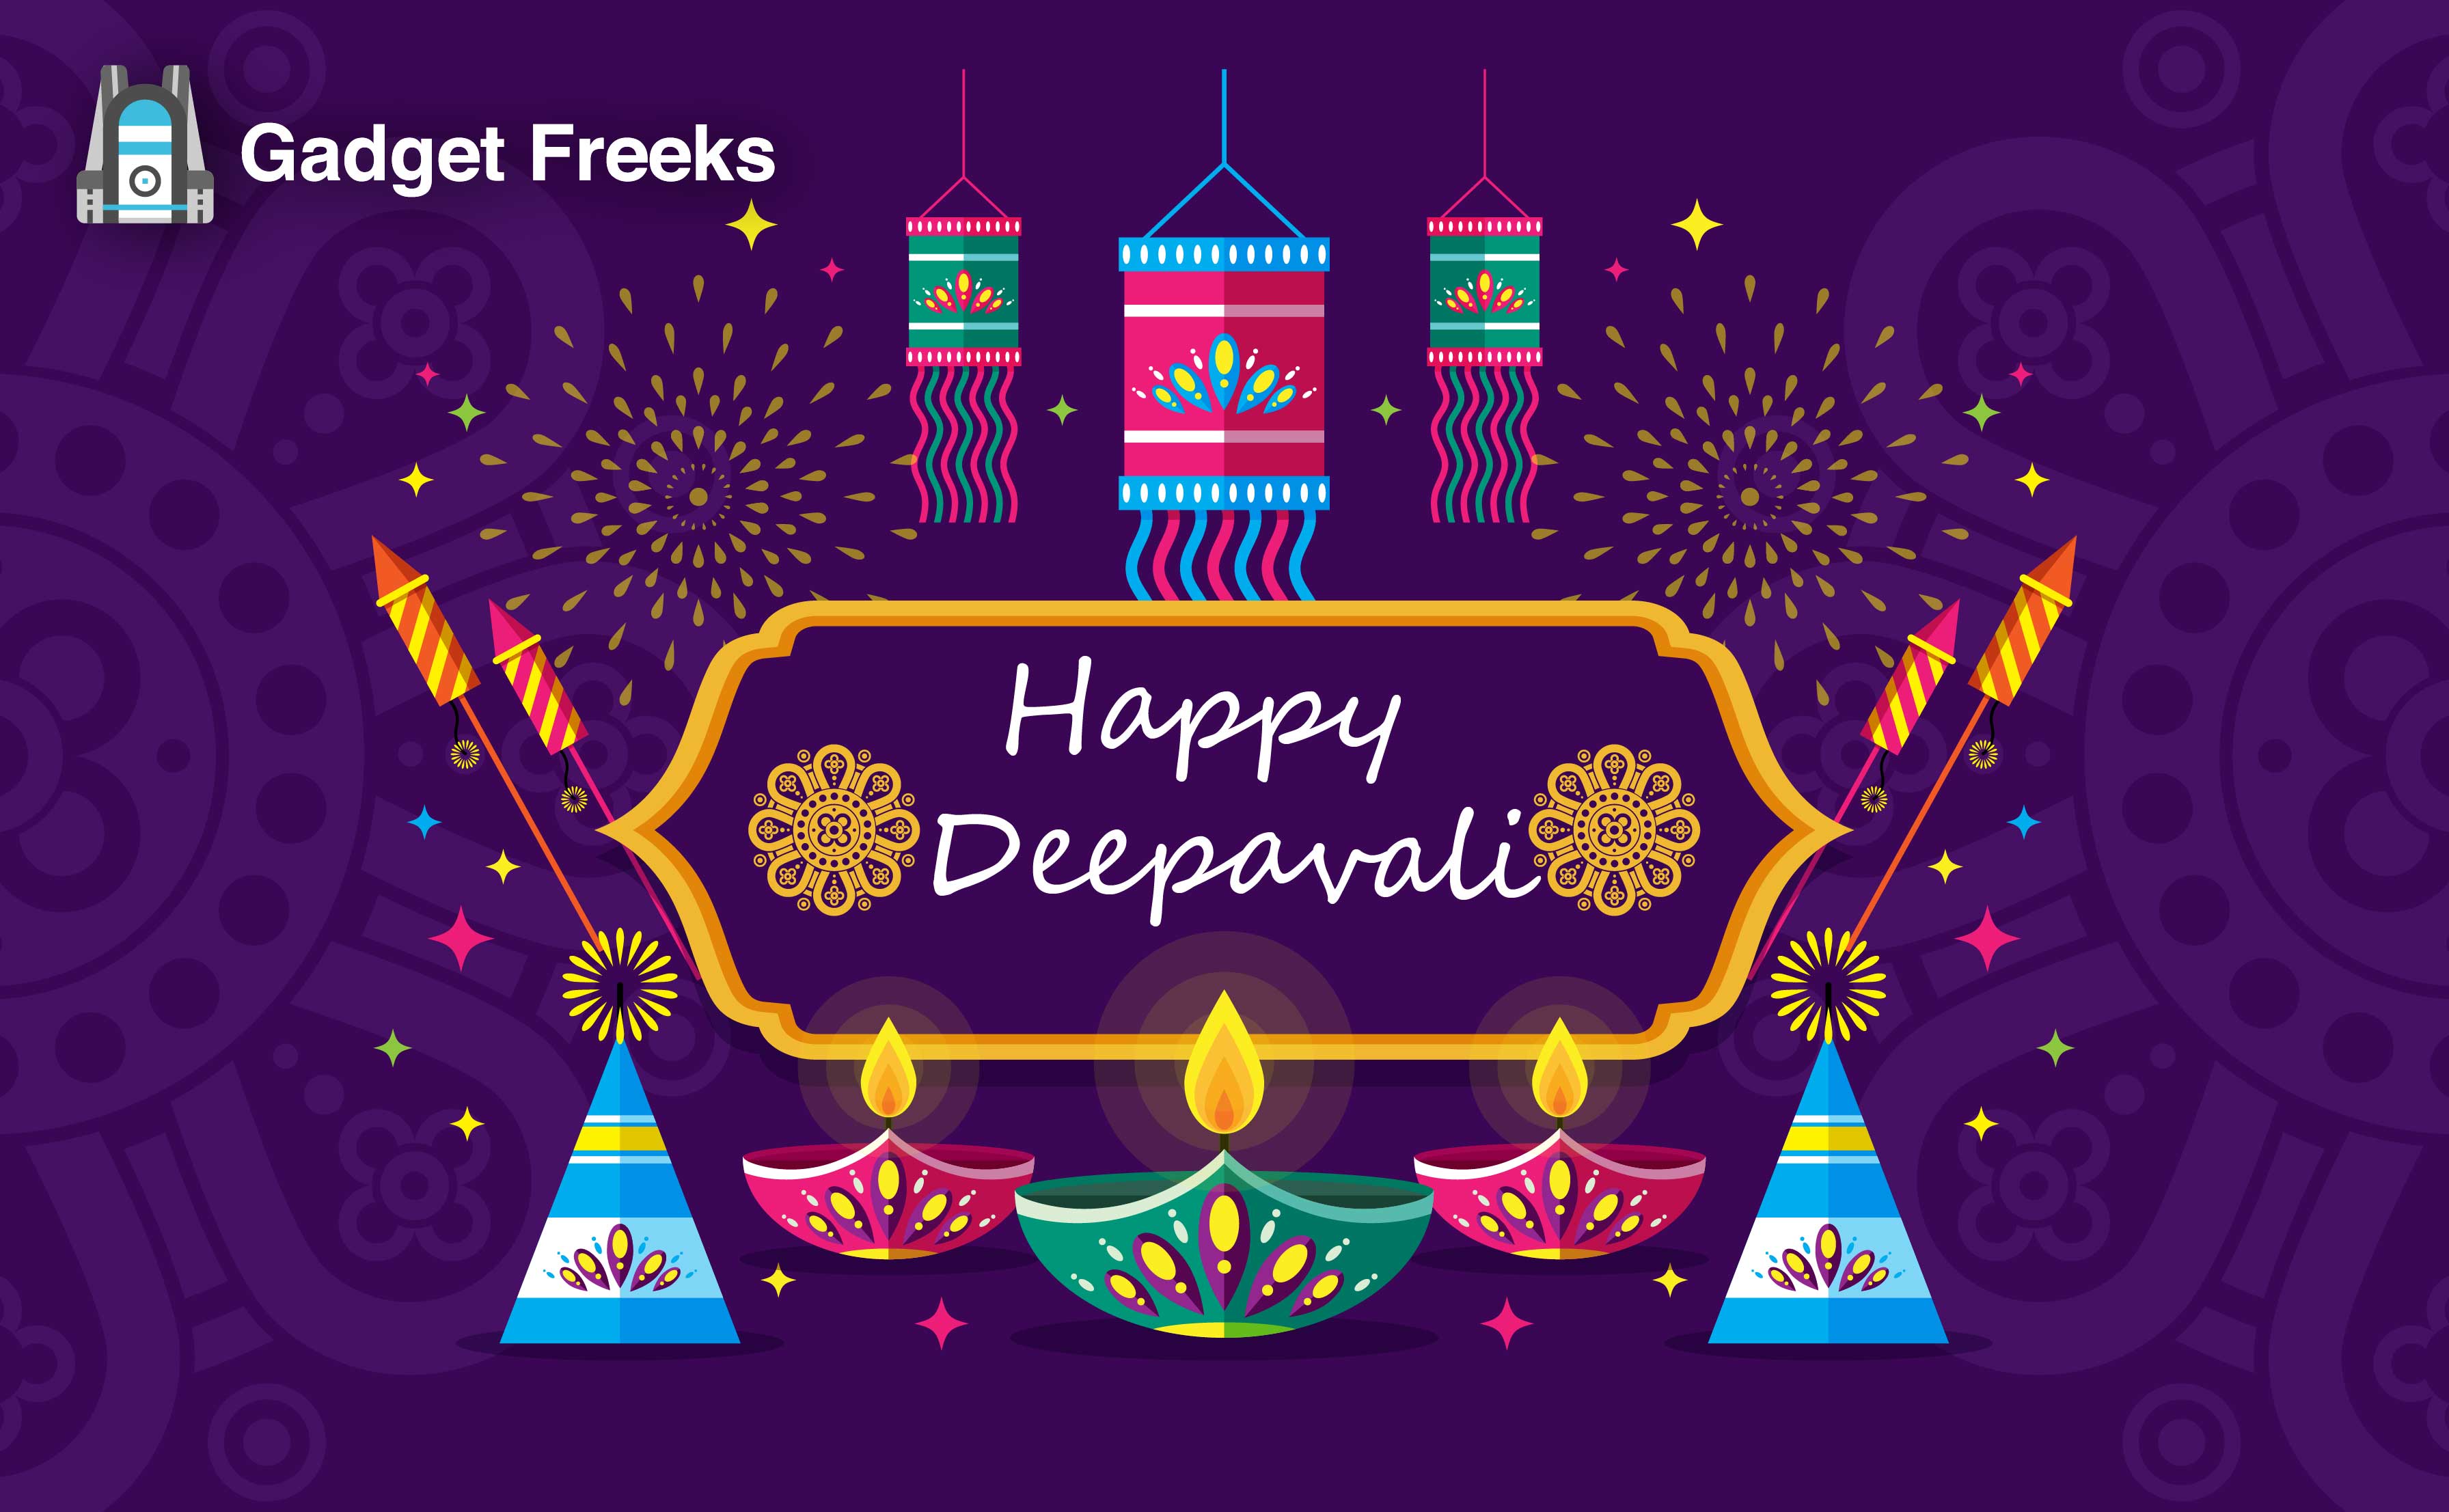 Happy deepavali 2019.